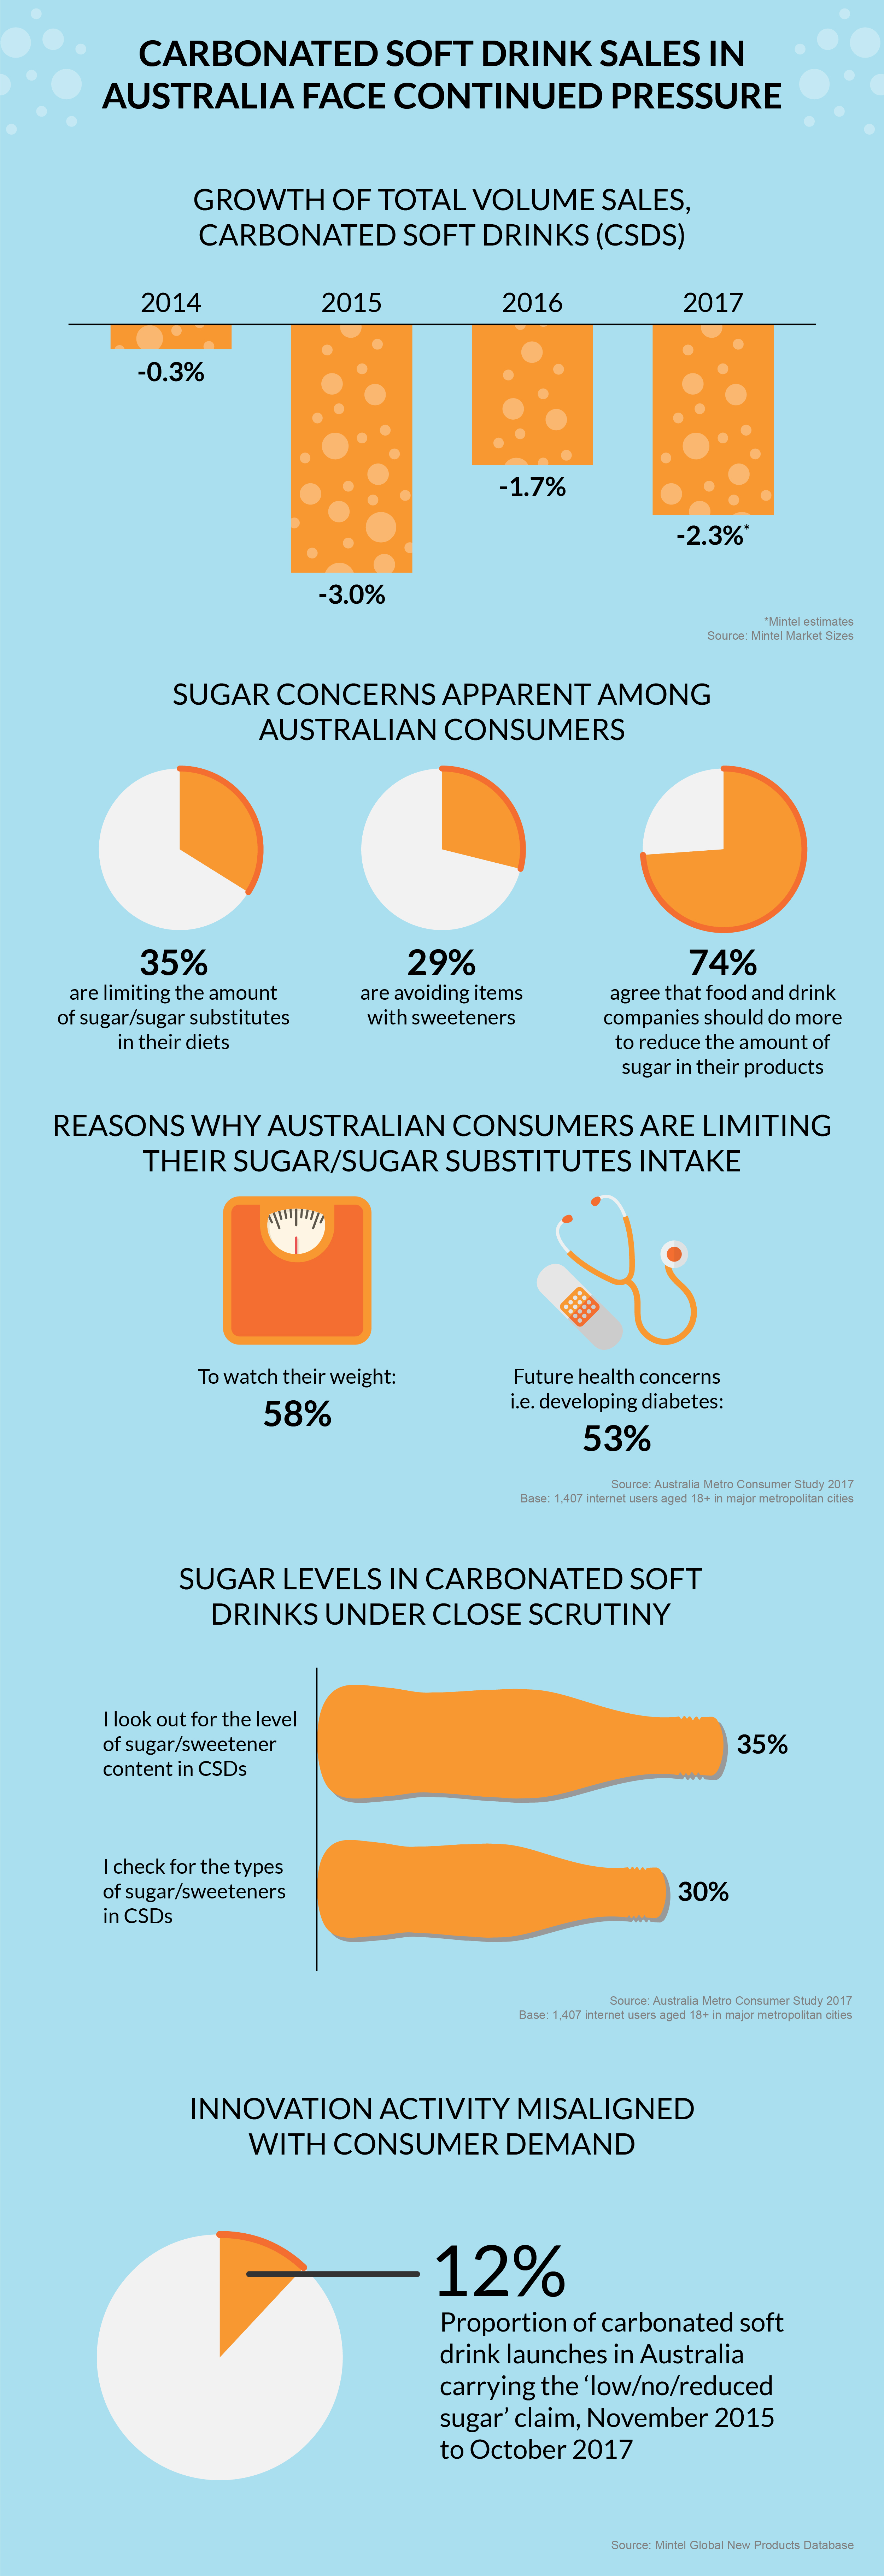 APAC Australia Sugar Press Release Infographic-FULL-WEB